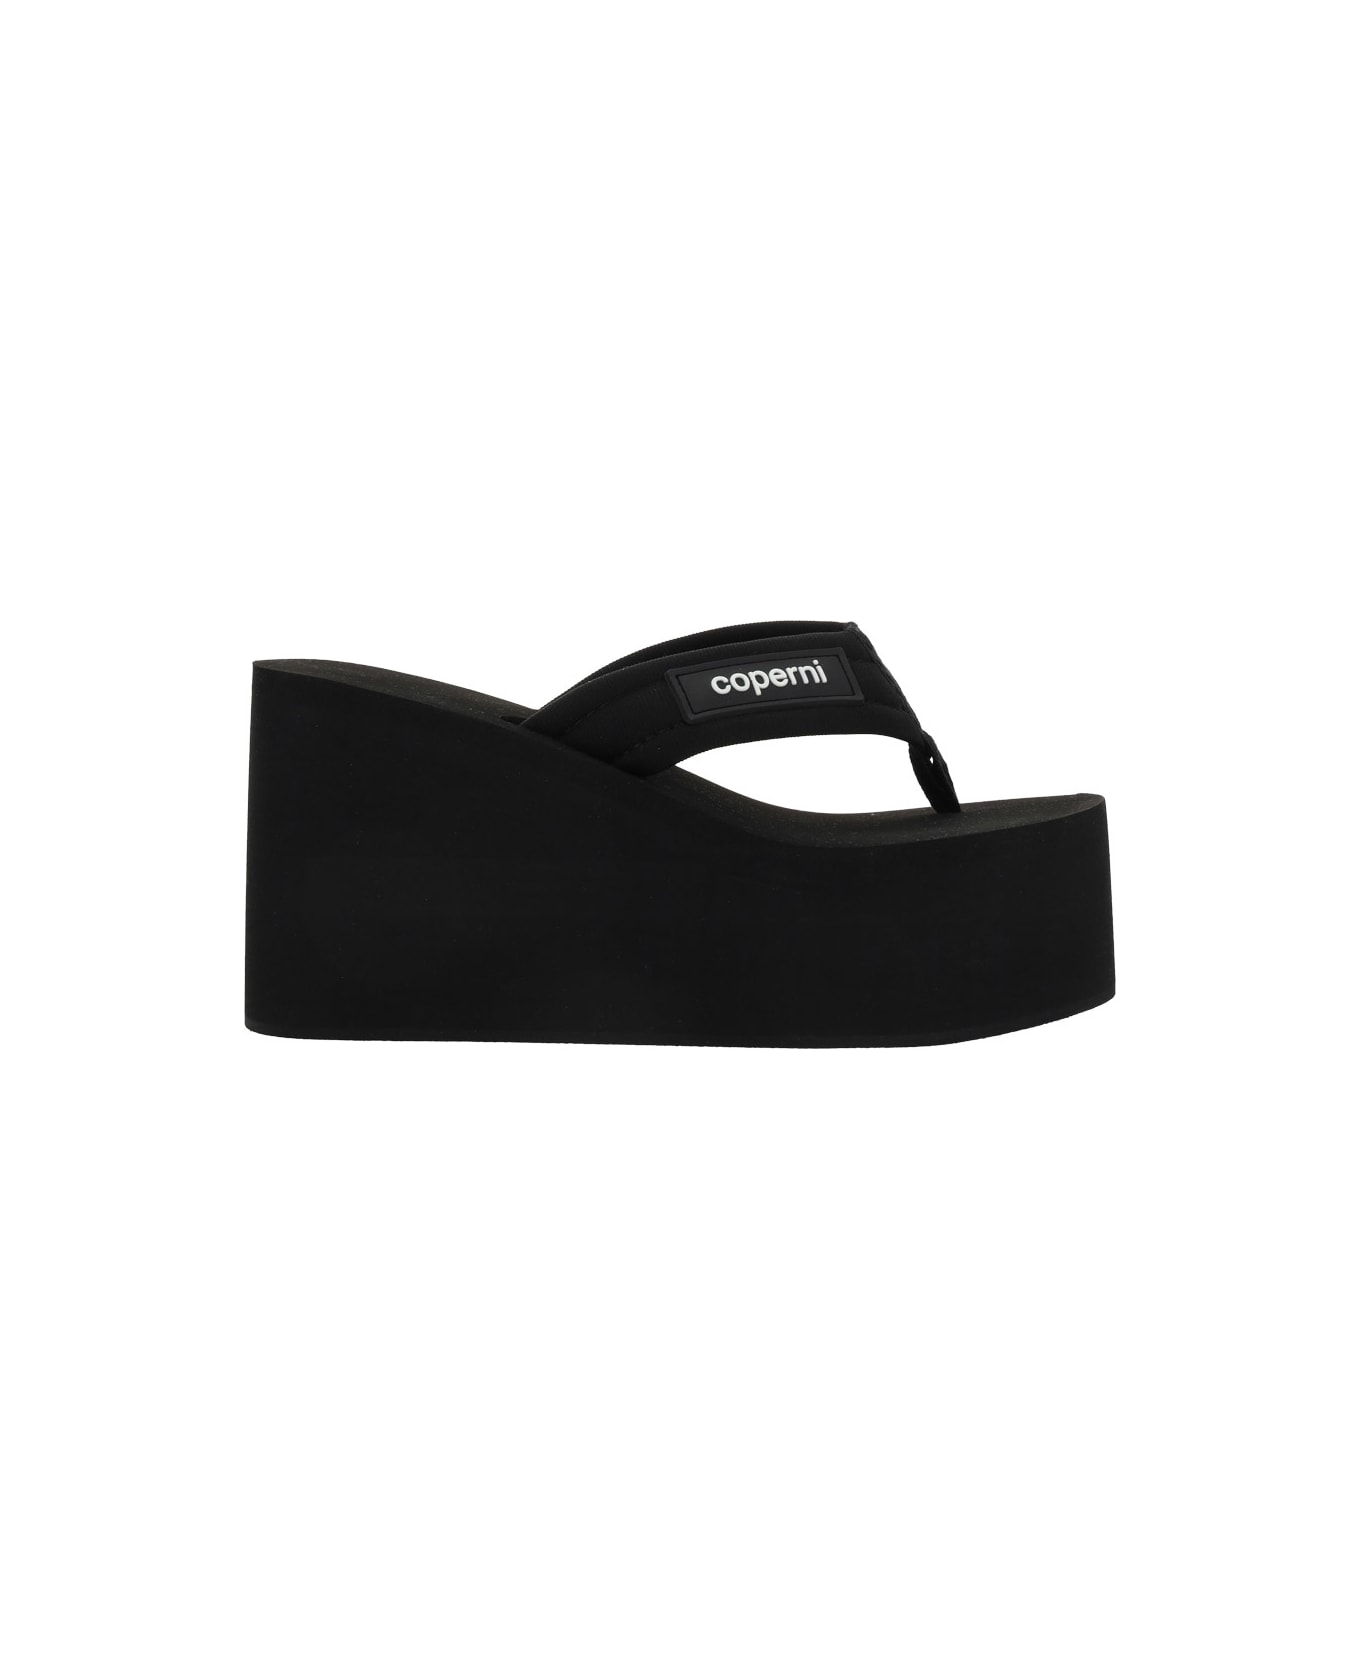 Coperni Wedge Sandals - Black サンダル